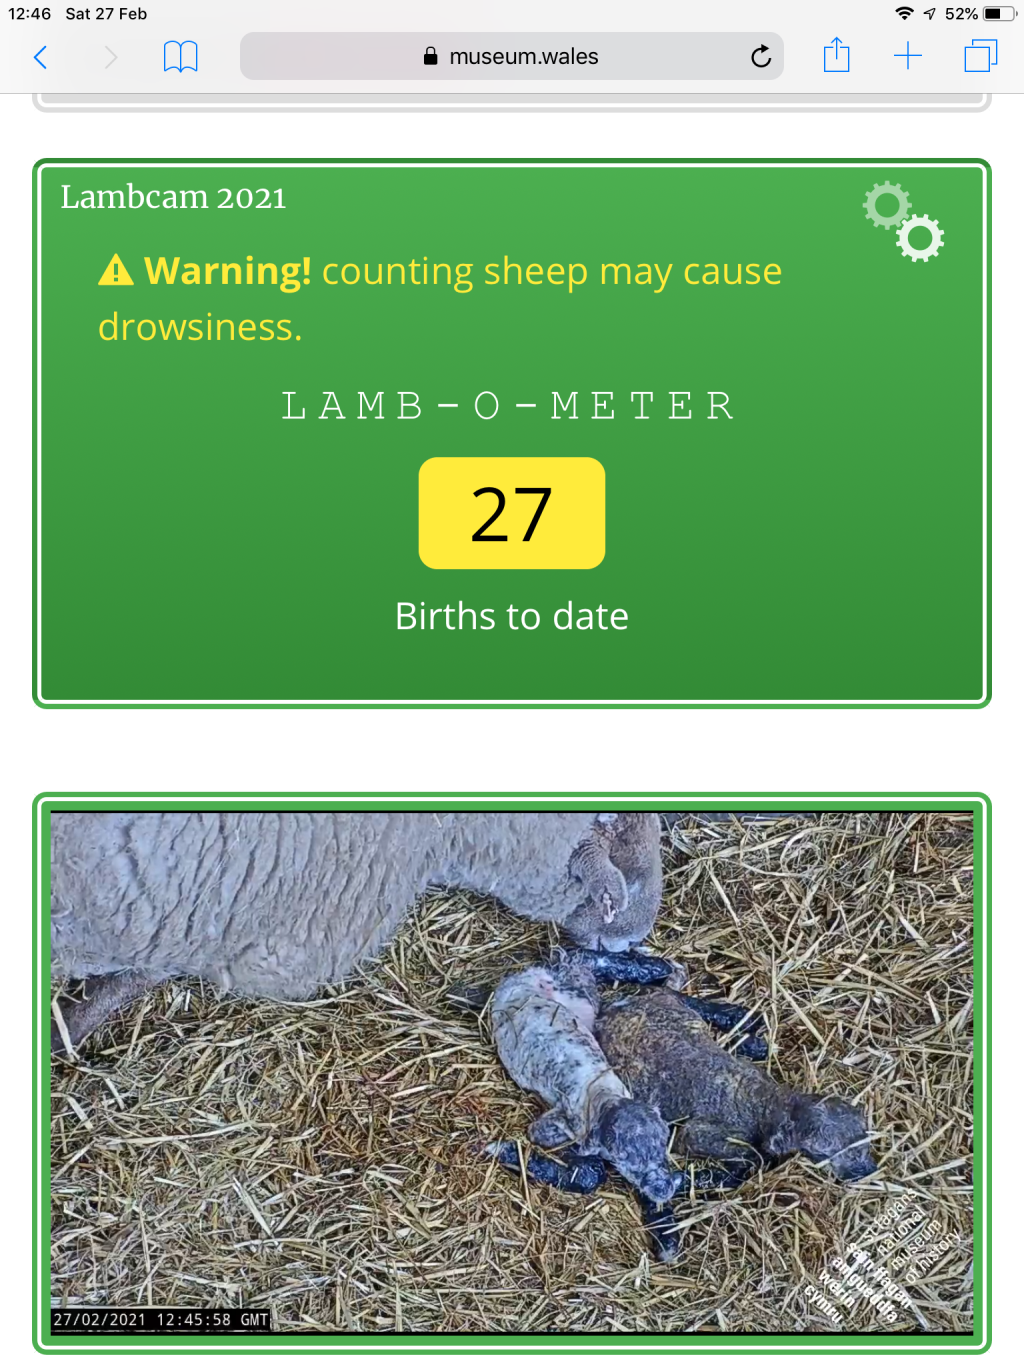 Image:A ewe and her newborn lambs